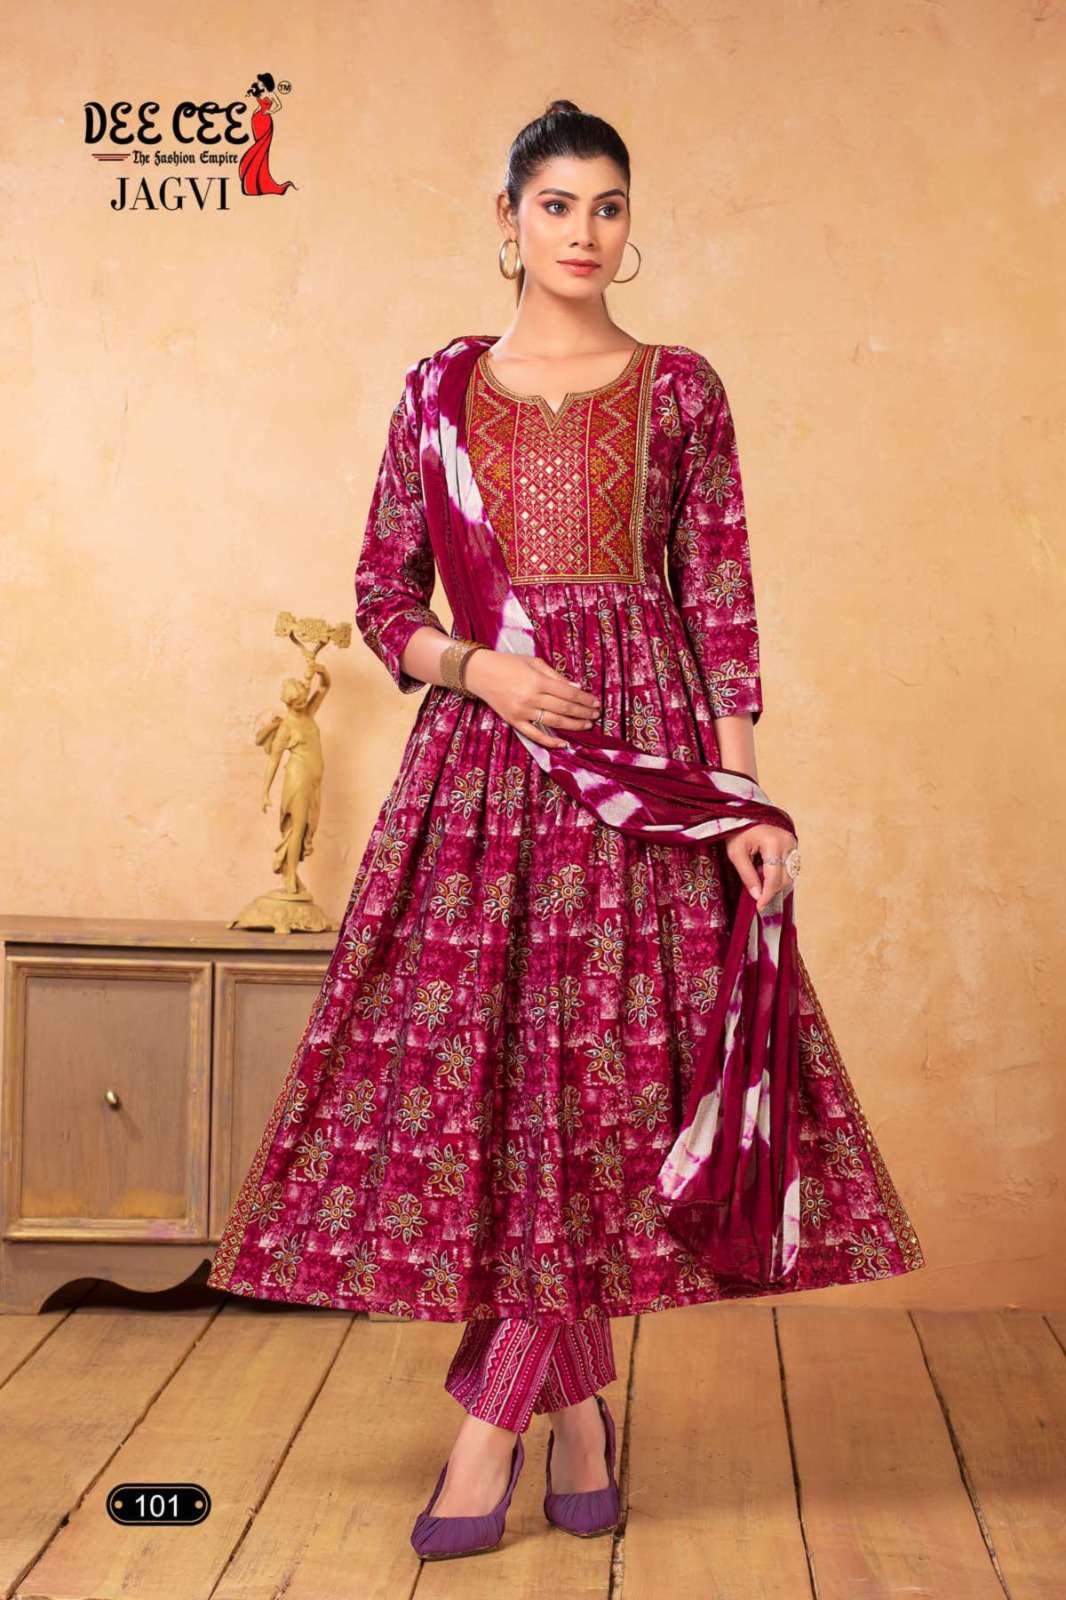 Jagvi Buy Dee Cee Wholesale Online Lowest Price Nayra Latest Designer Kurta Suit Sets